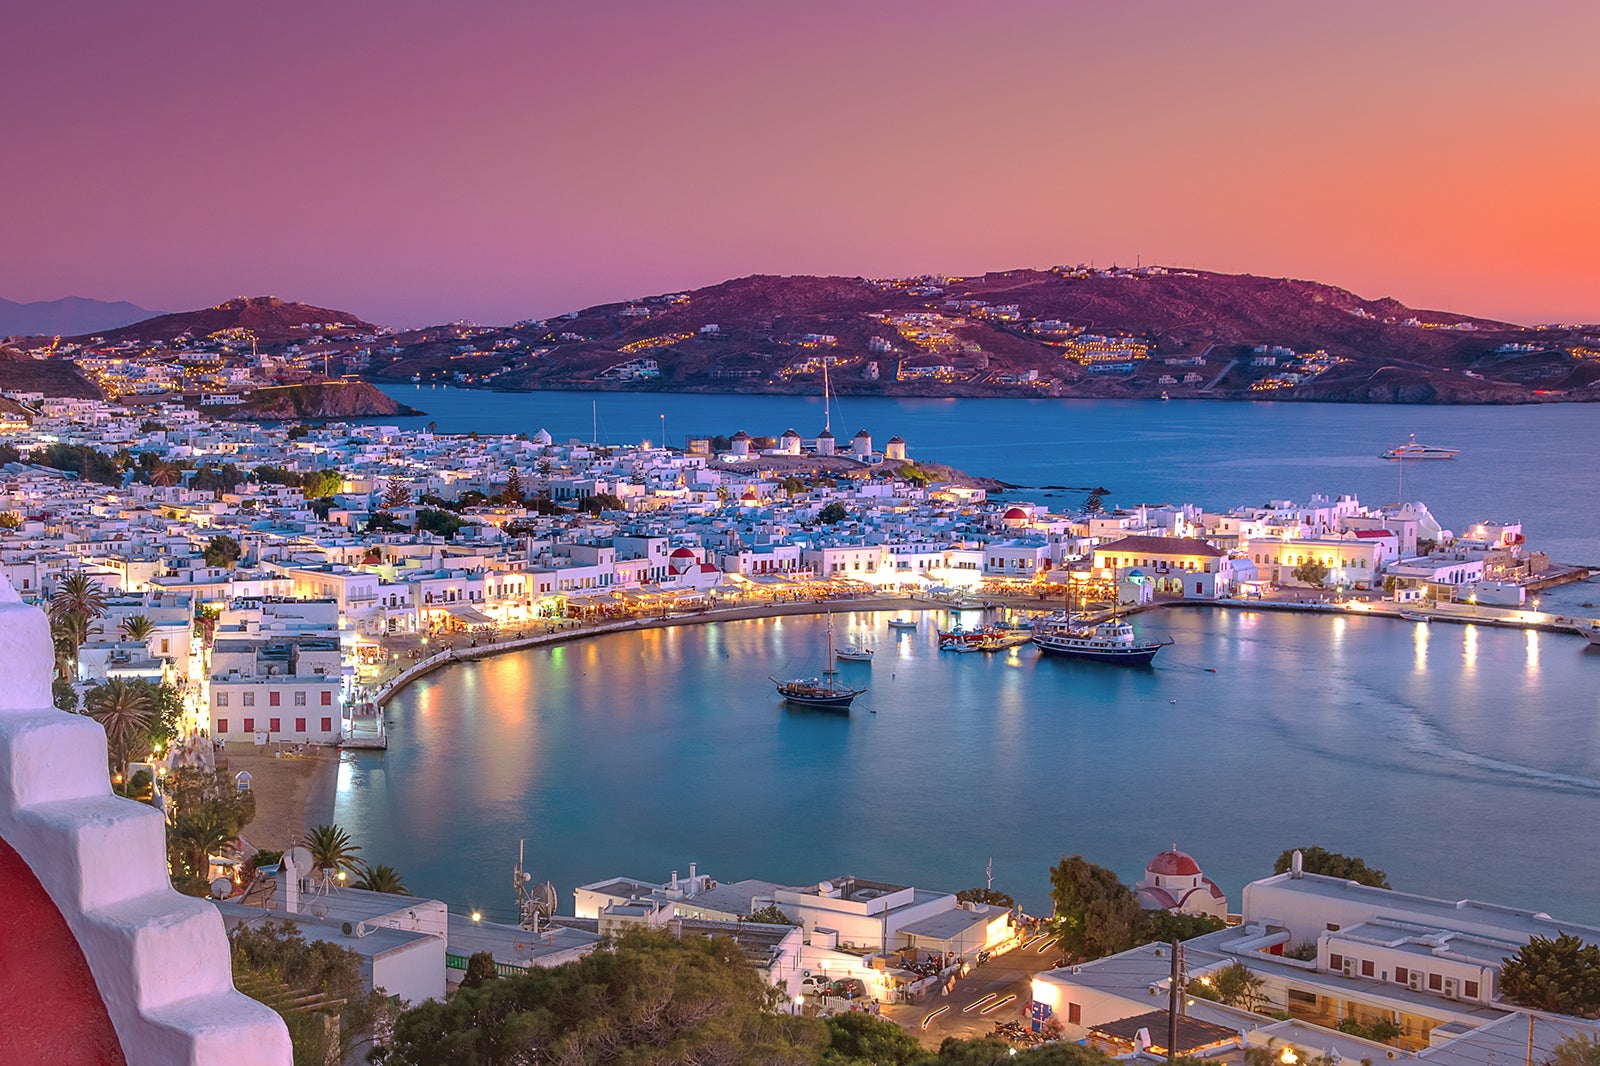 Cruise the Greek Islands and Turkish Coastline